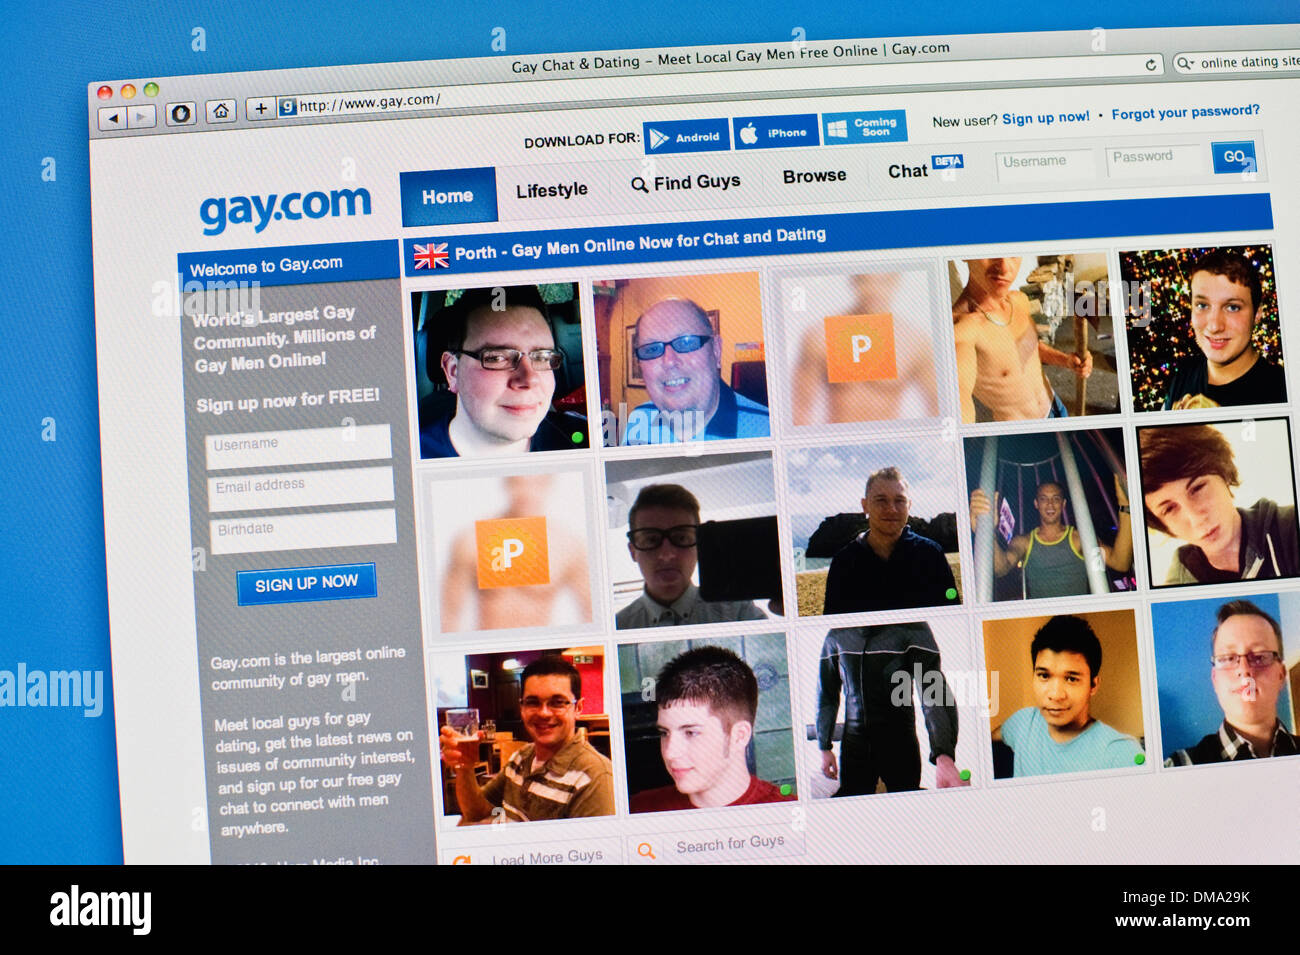 Dating Website For Gay Men 56